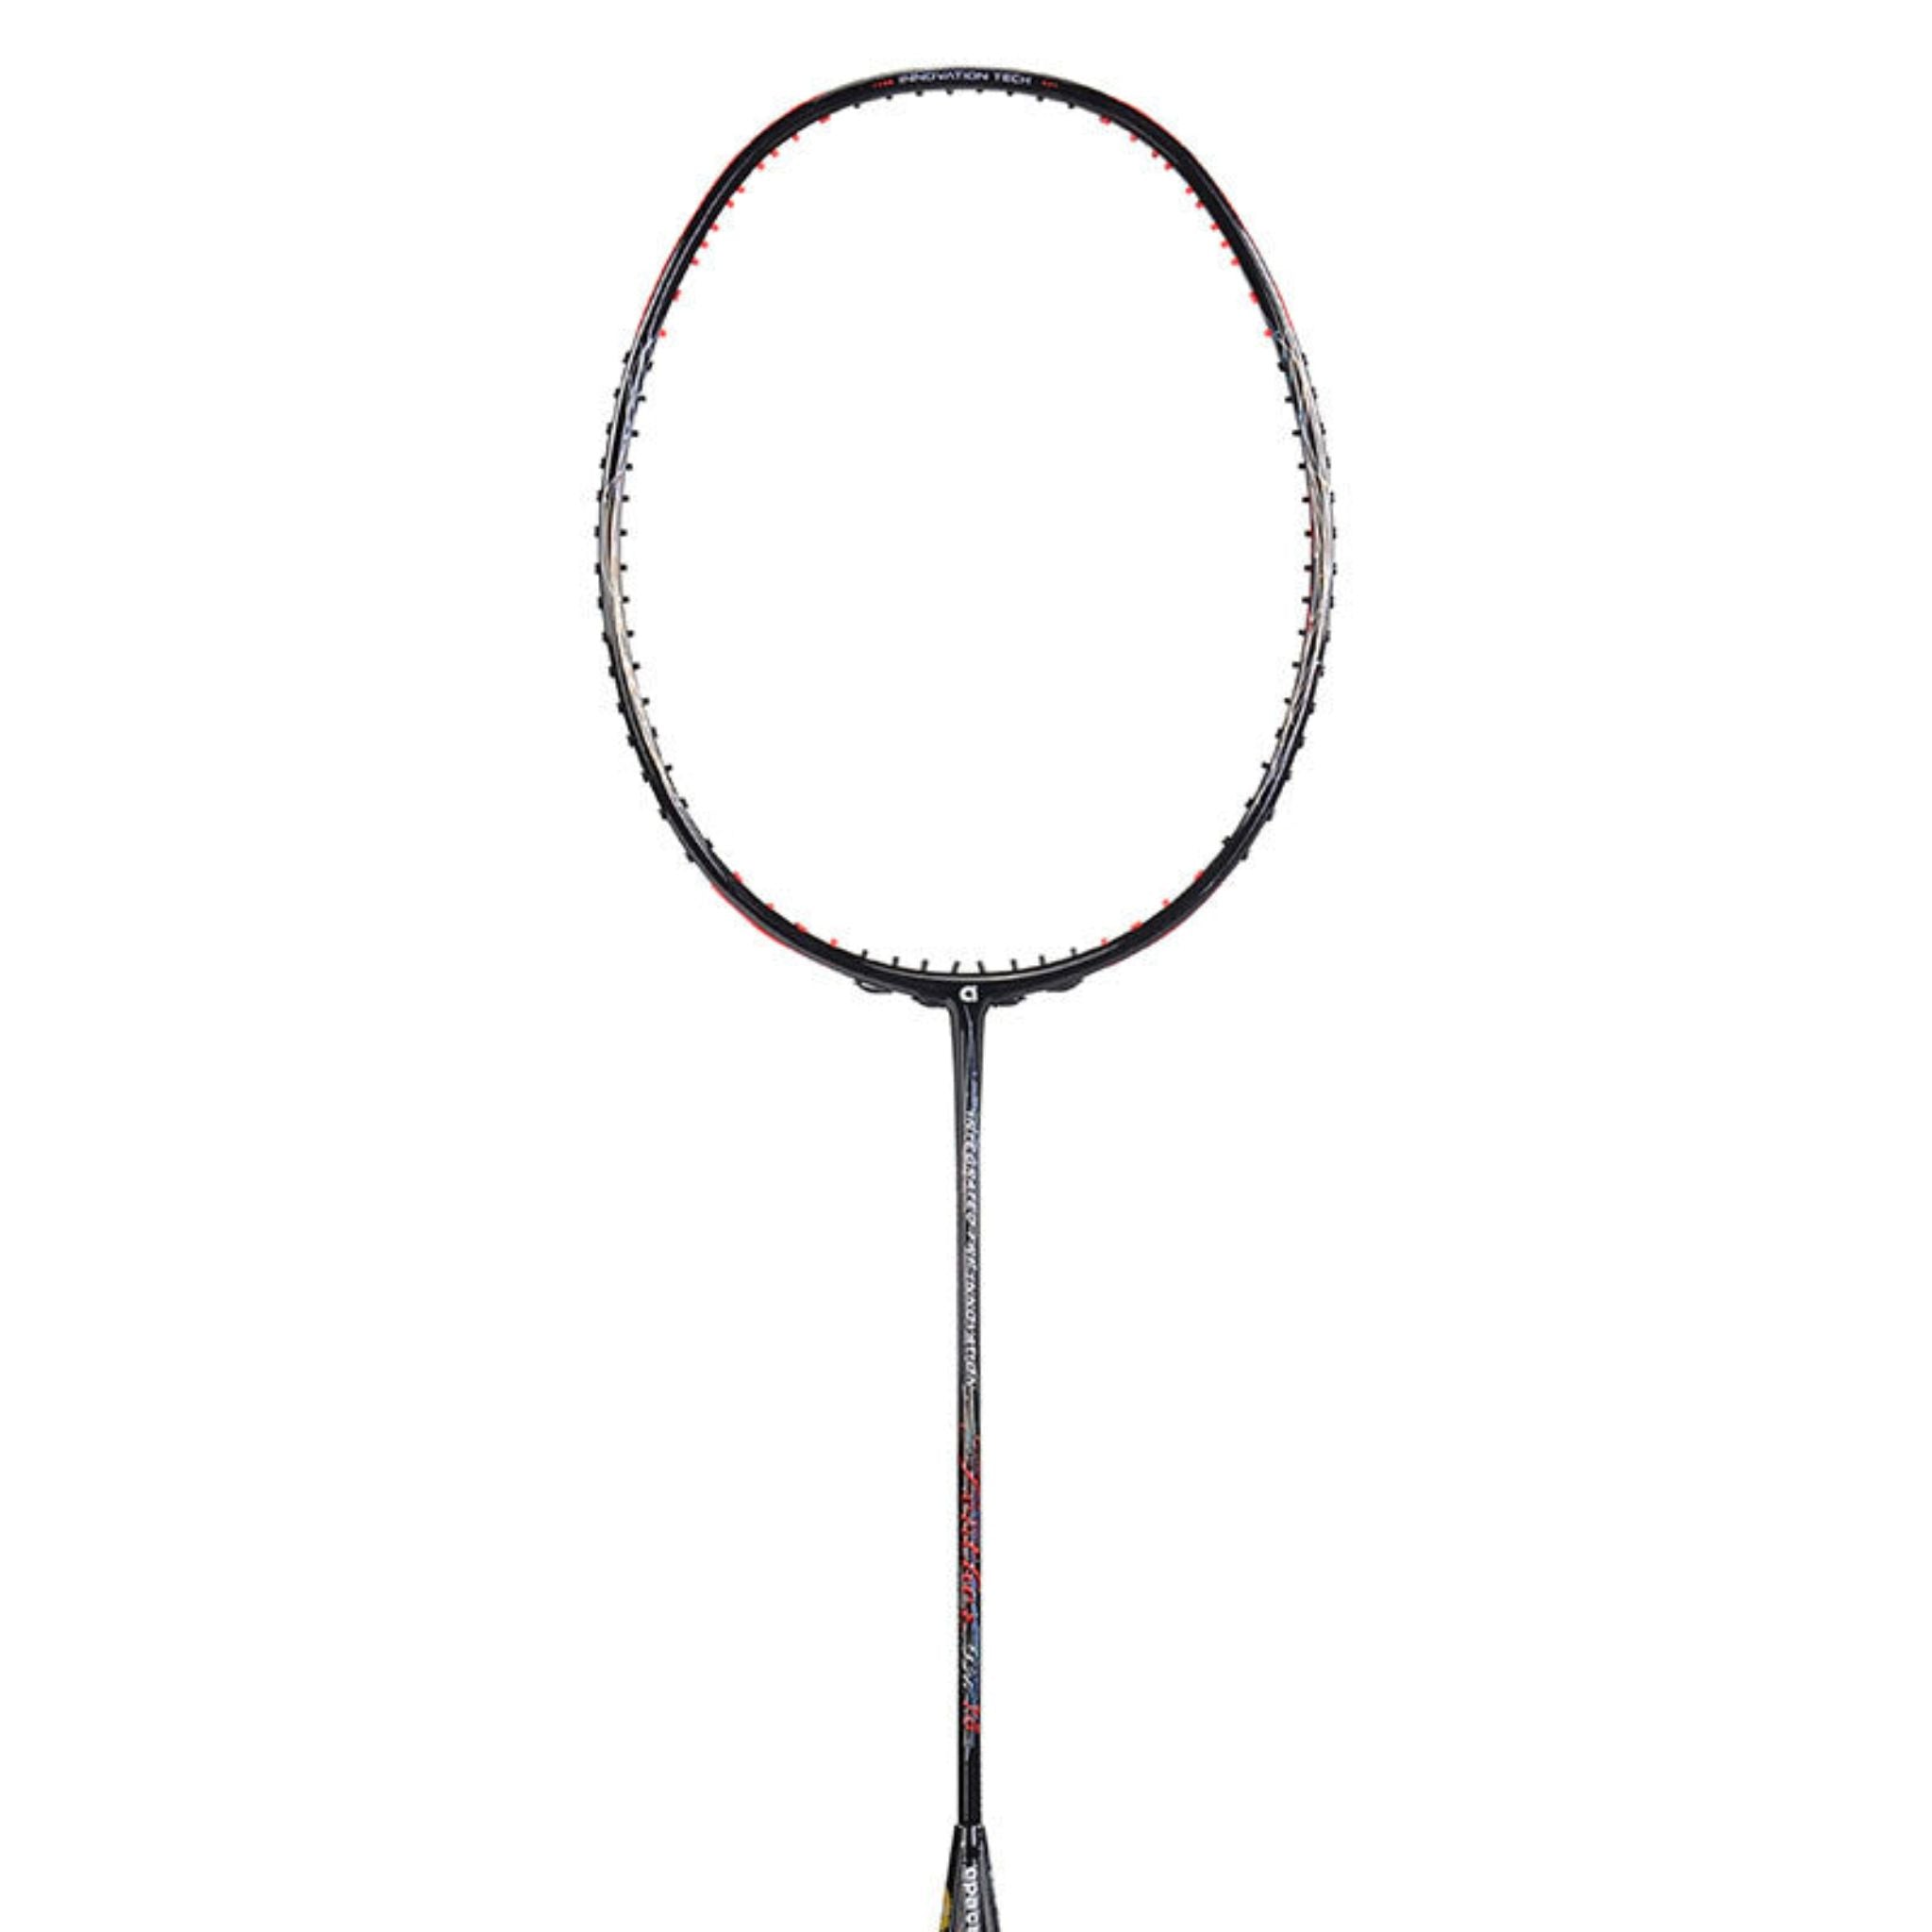 APACS Feather Lite 75 Badminton Racket